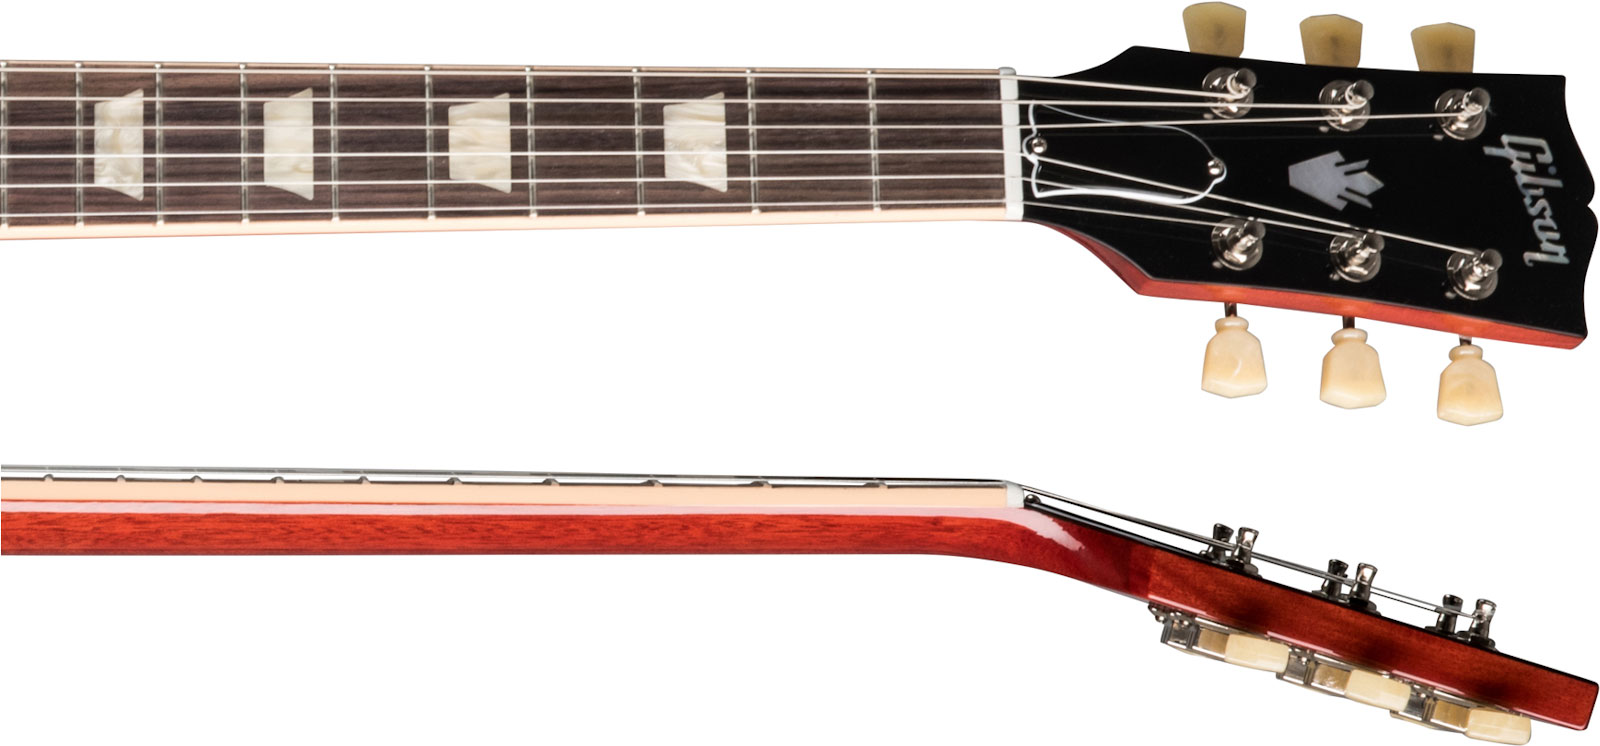 Gibson Sg Standard '61 2h Ht Rw - Vintage Cherry - Guitarra electrica retro rock - Variation 3